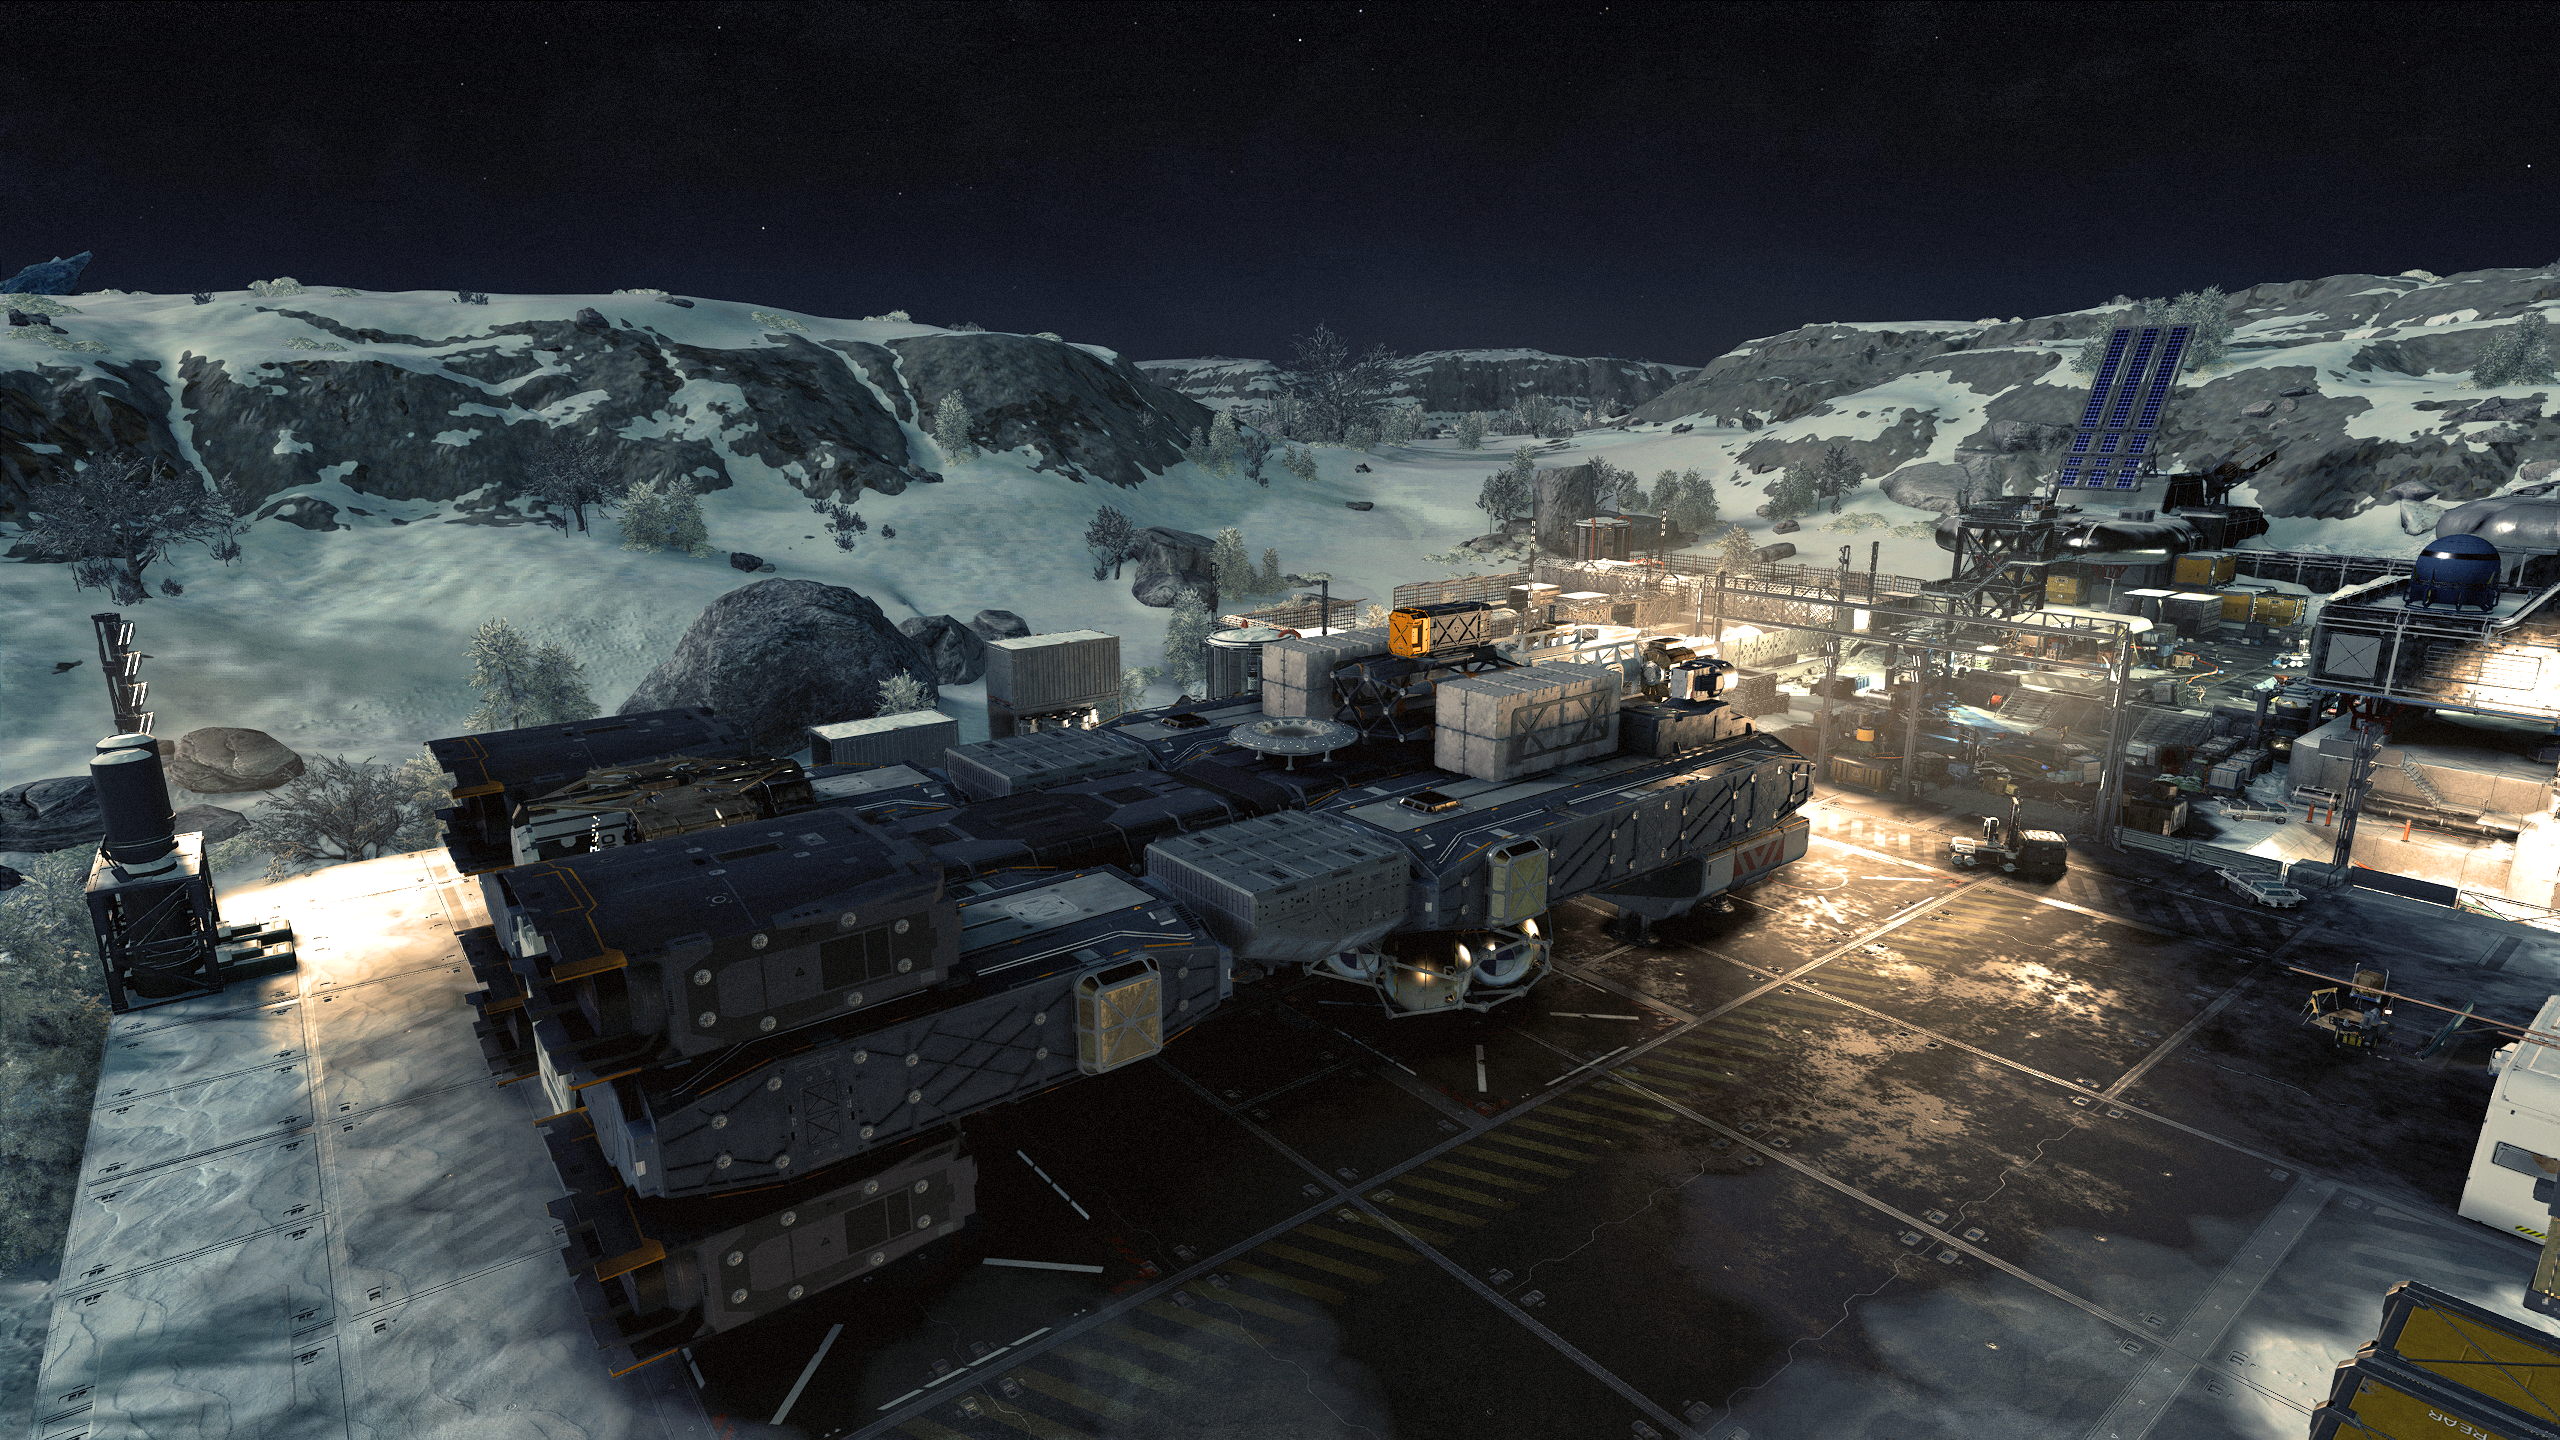 General 2560x1440 Starfield (video game) screen shot science fiction spaceship landing pad